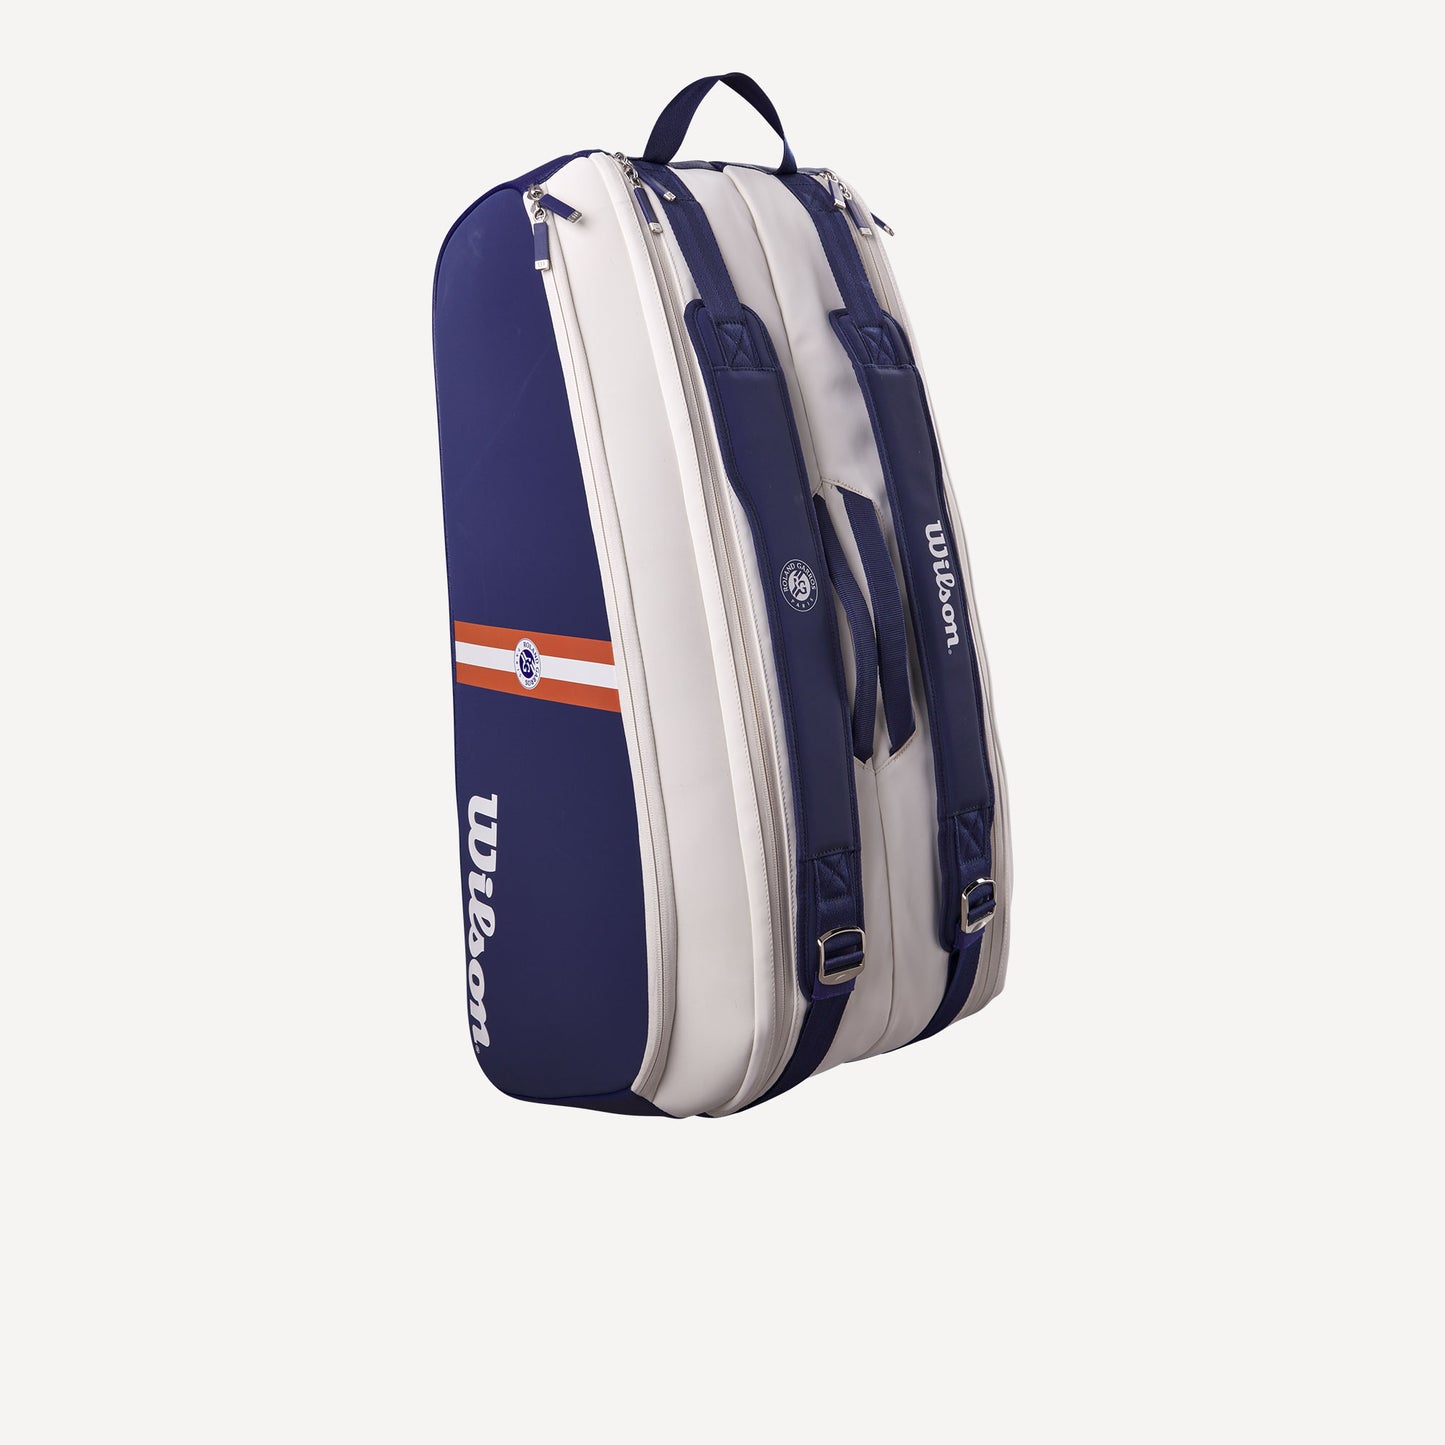 Wilson Roland-Garros Super Tour 9 Pack Tennis Bag Blue (3)